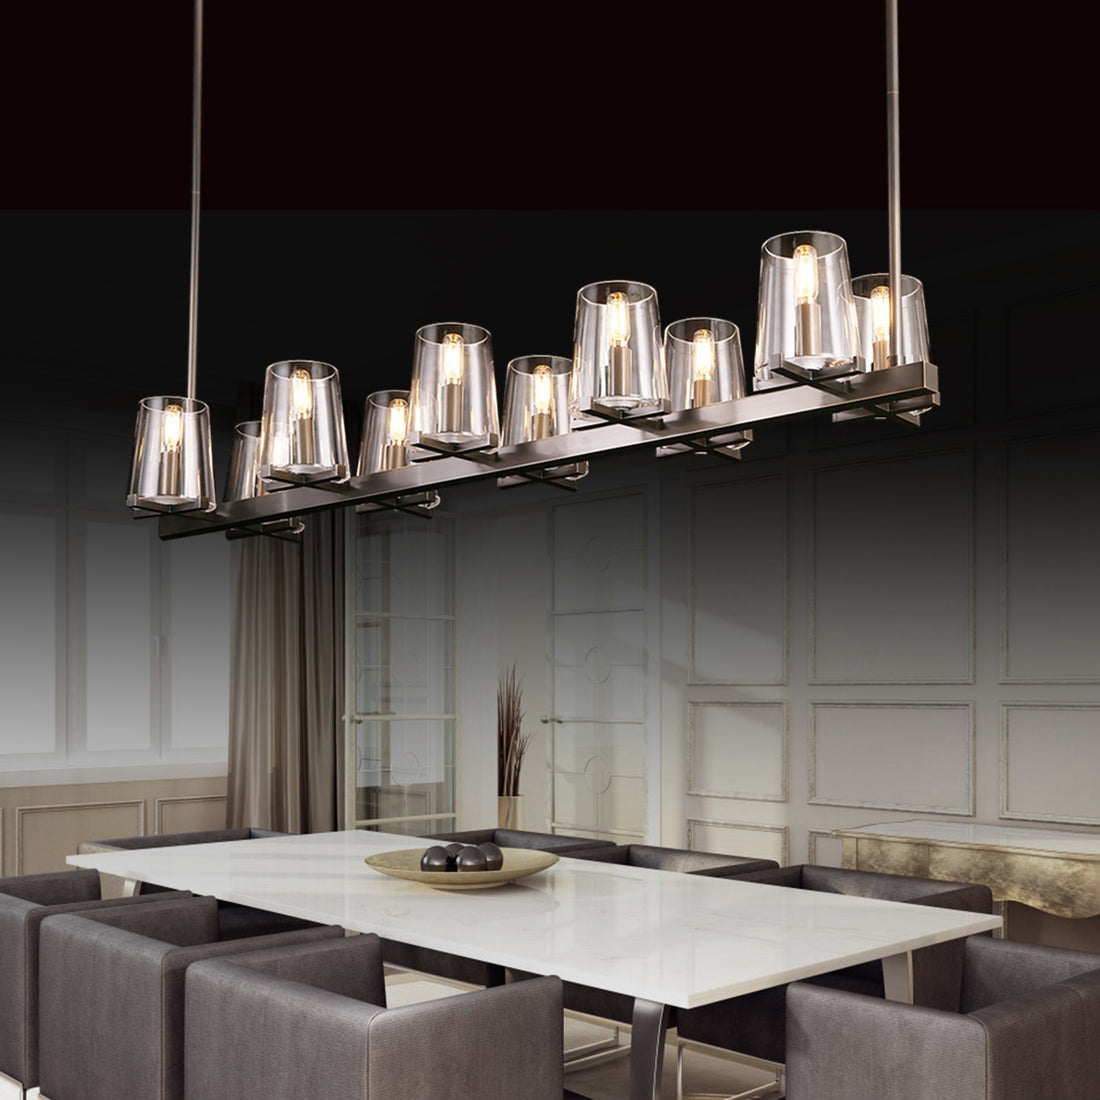 Ronald Modern Linear Glass Dining Room Chandelier Lighting Fixtures